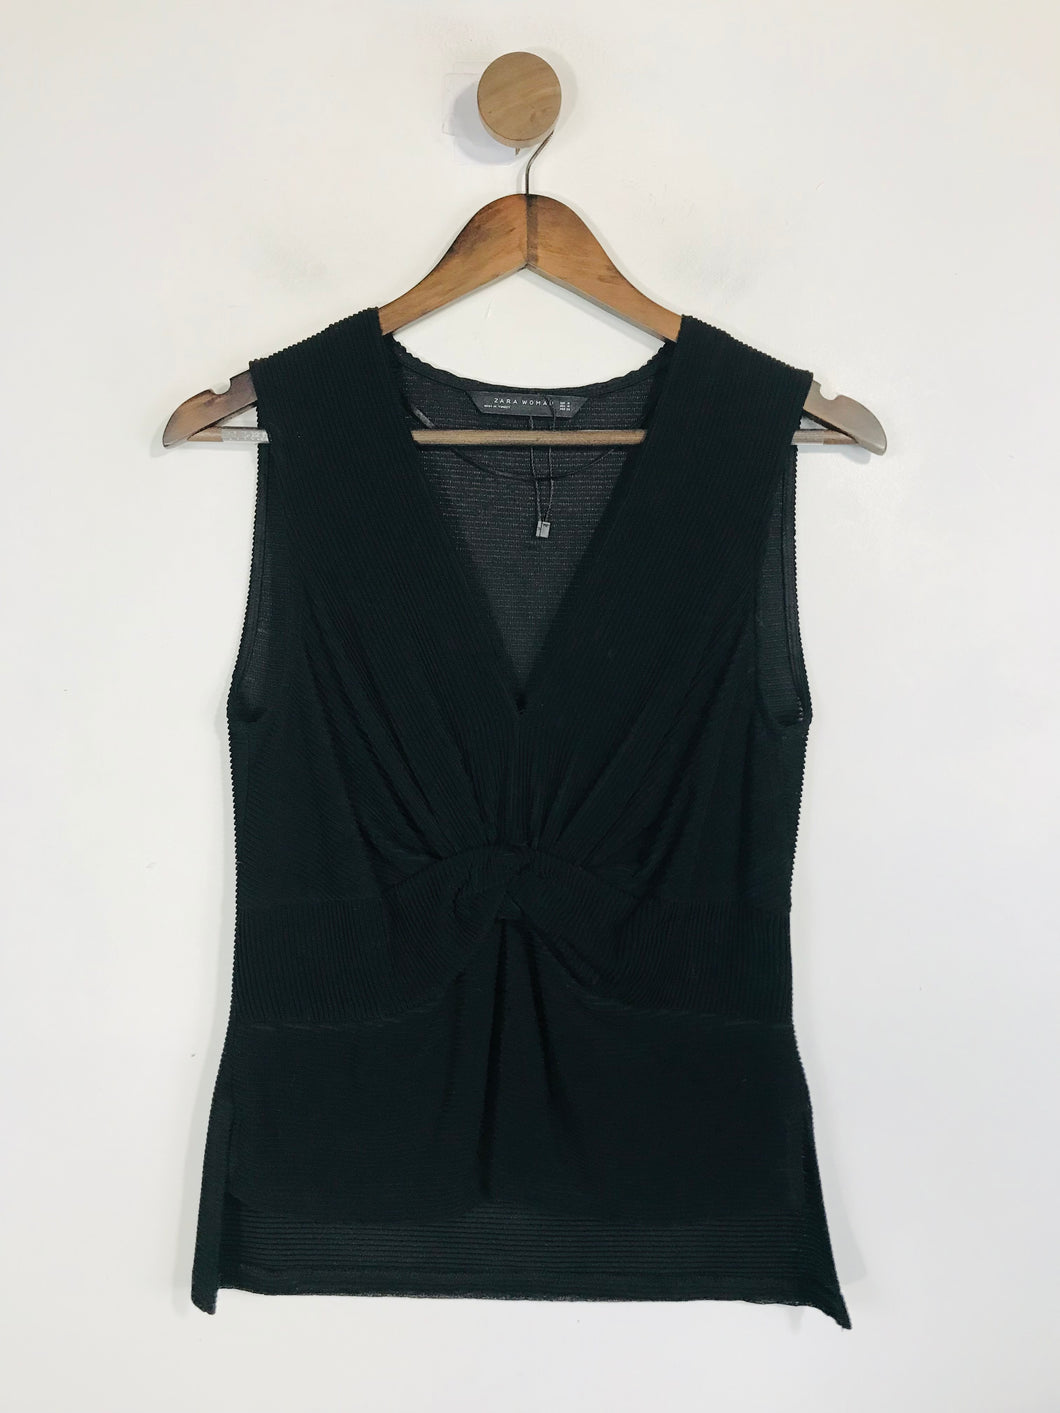 Zara Women's Ribbed Ruched Blouse | M UK10-12 | Black